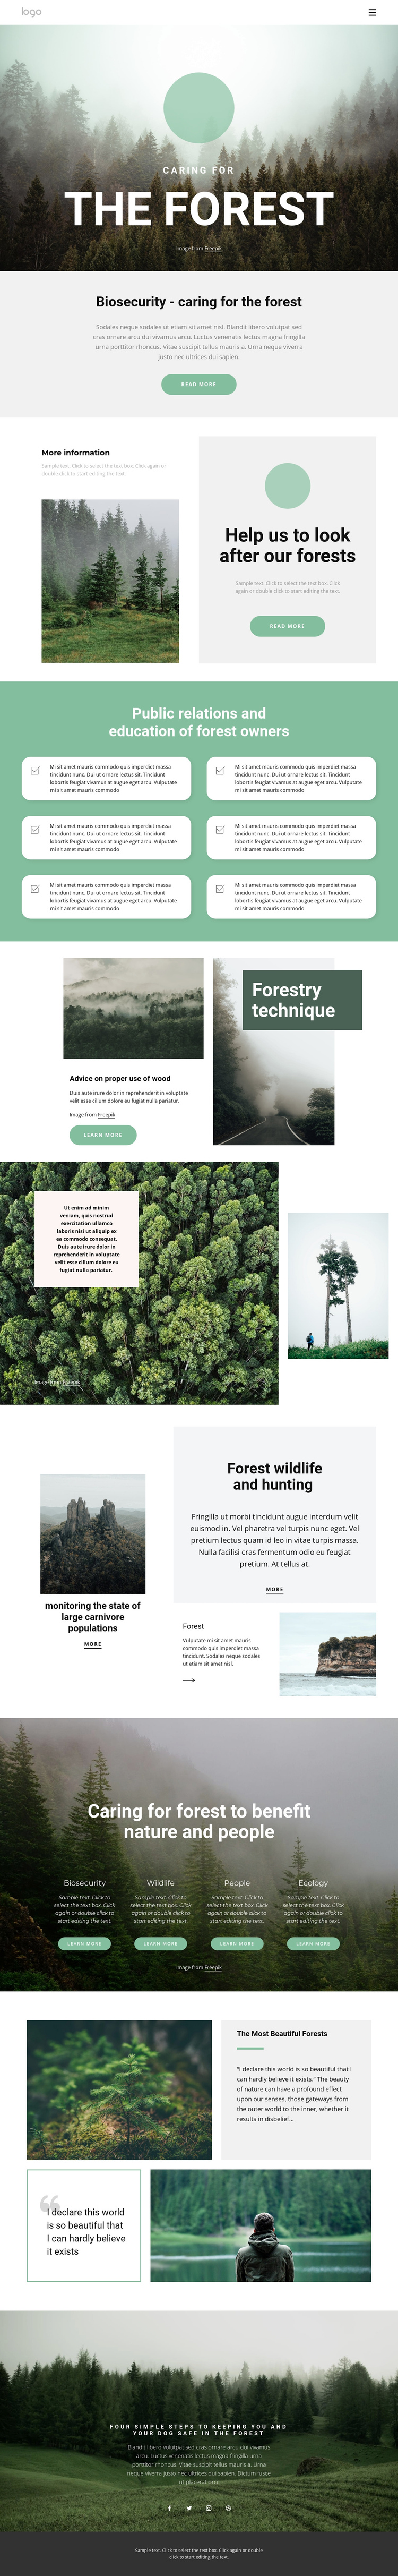 Caring for parks and forests Website Builder Software